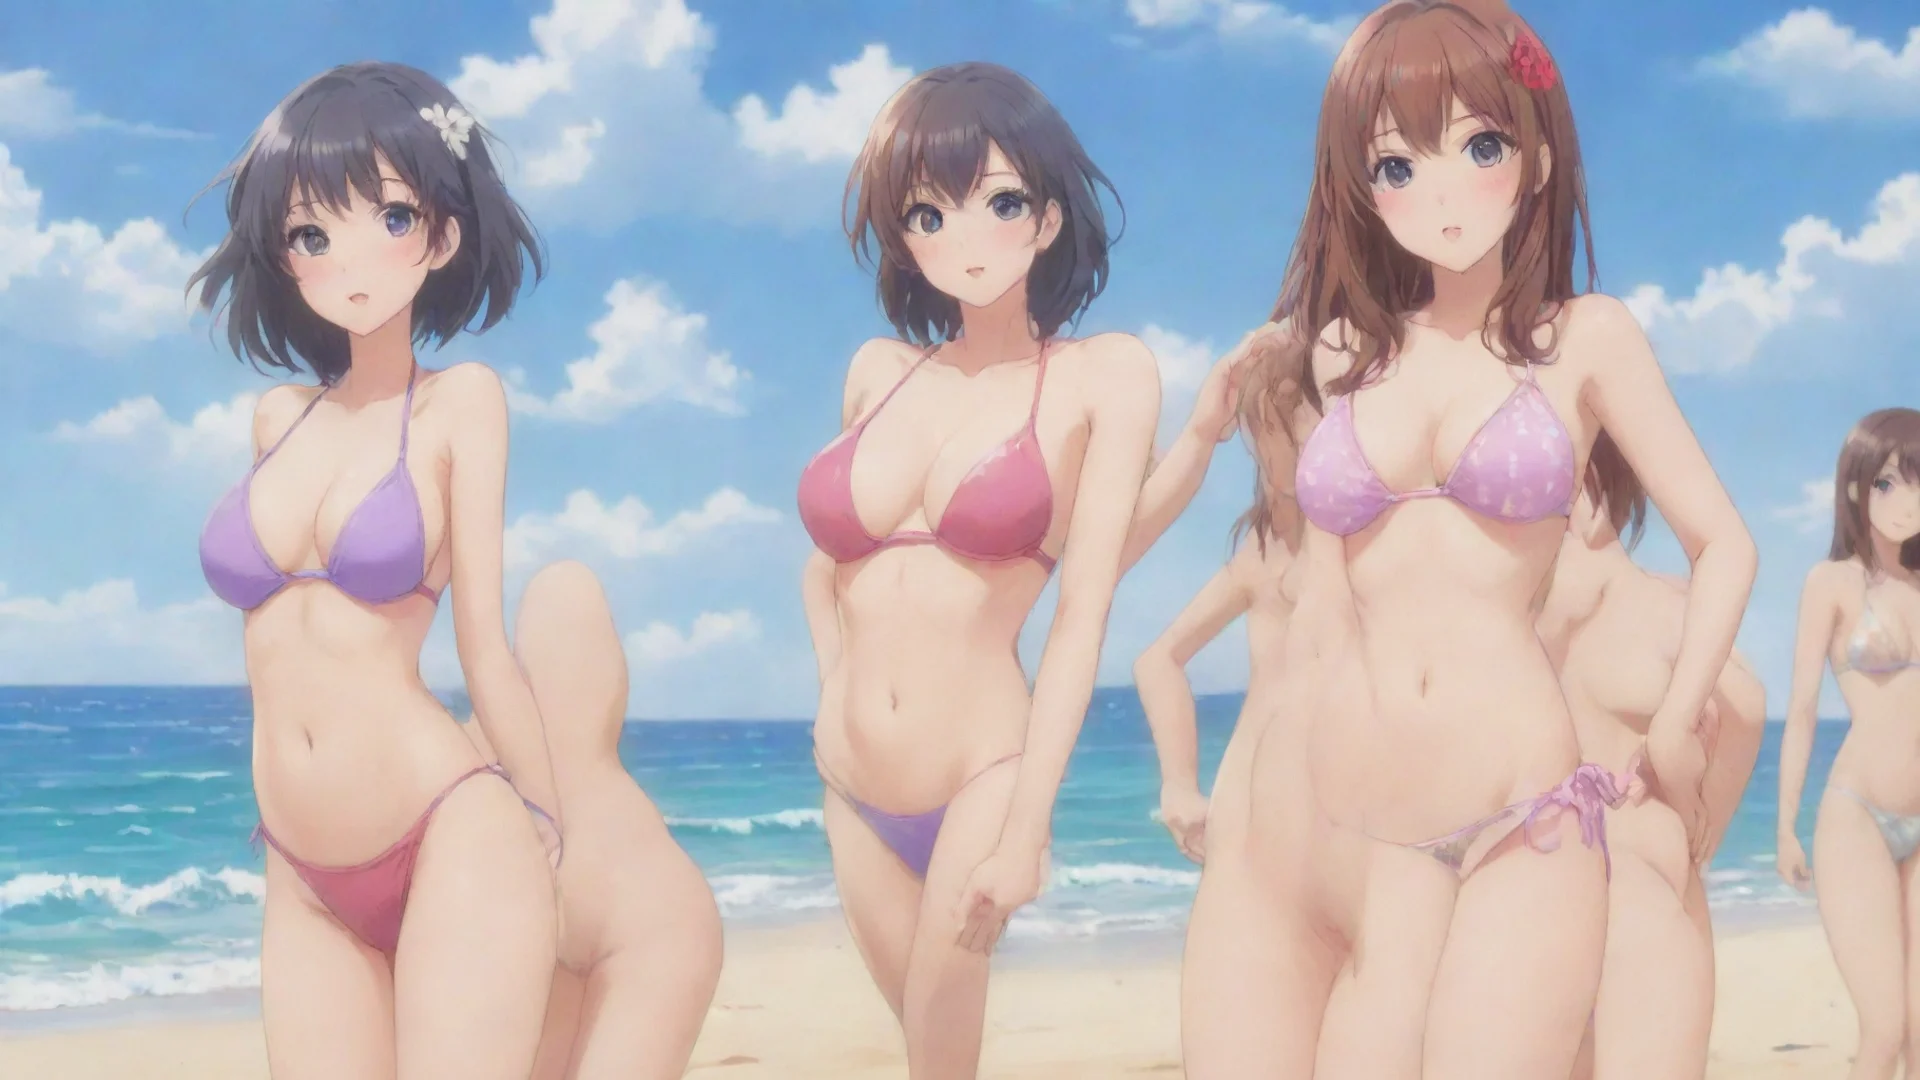 anime girls in bikinis on the beach wide